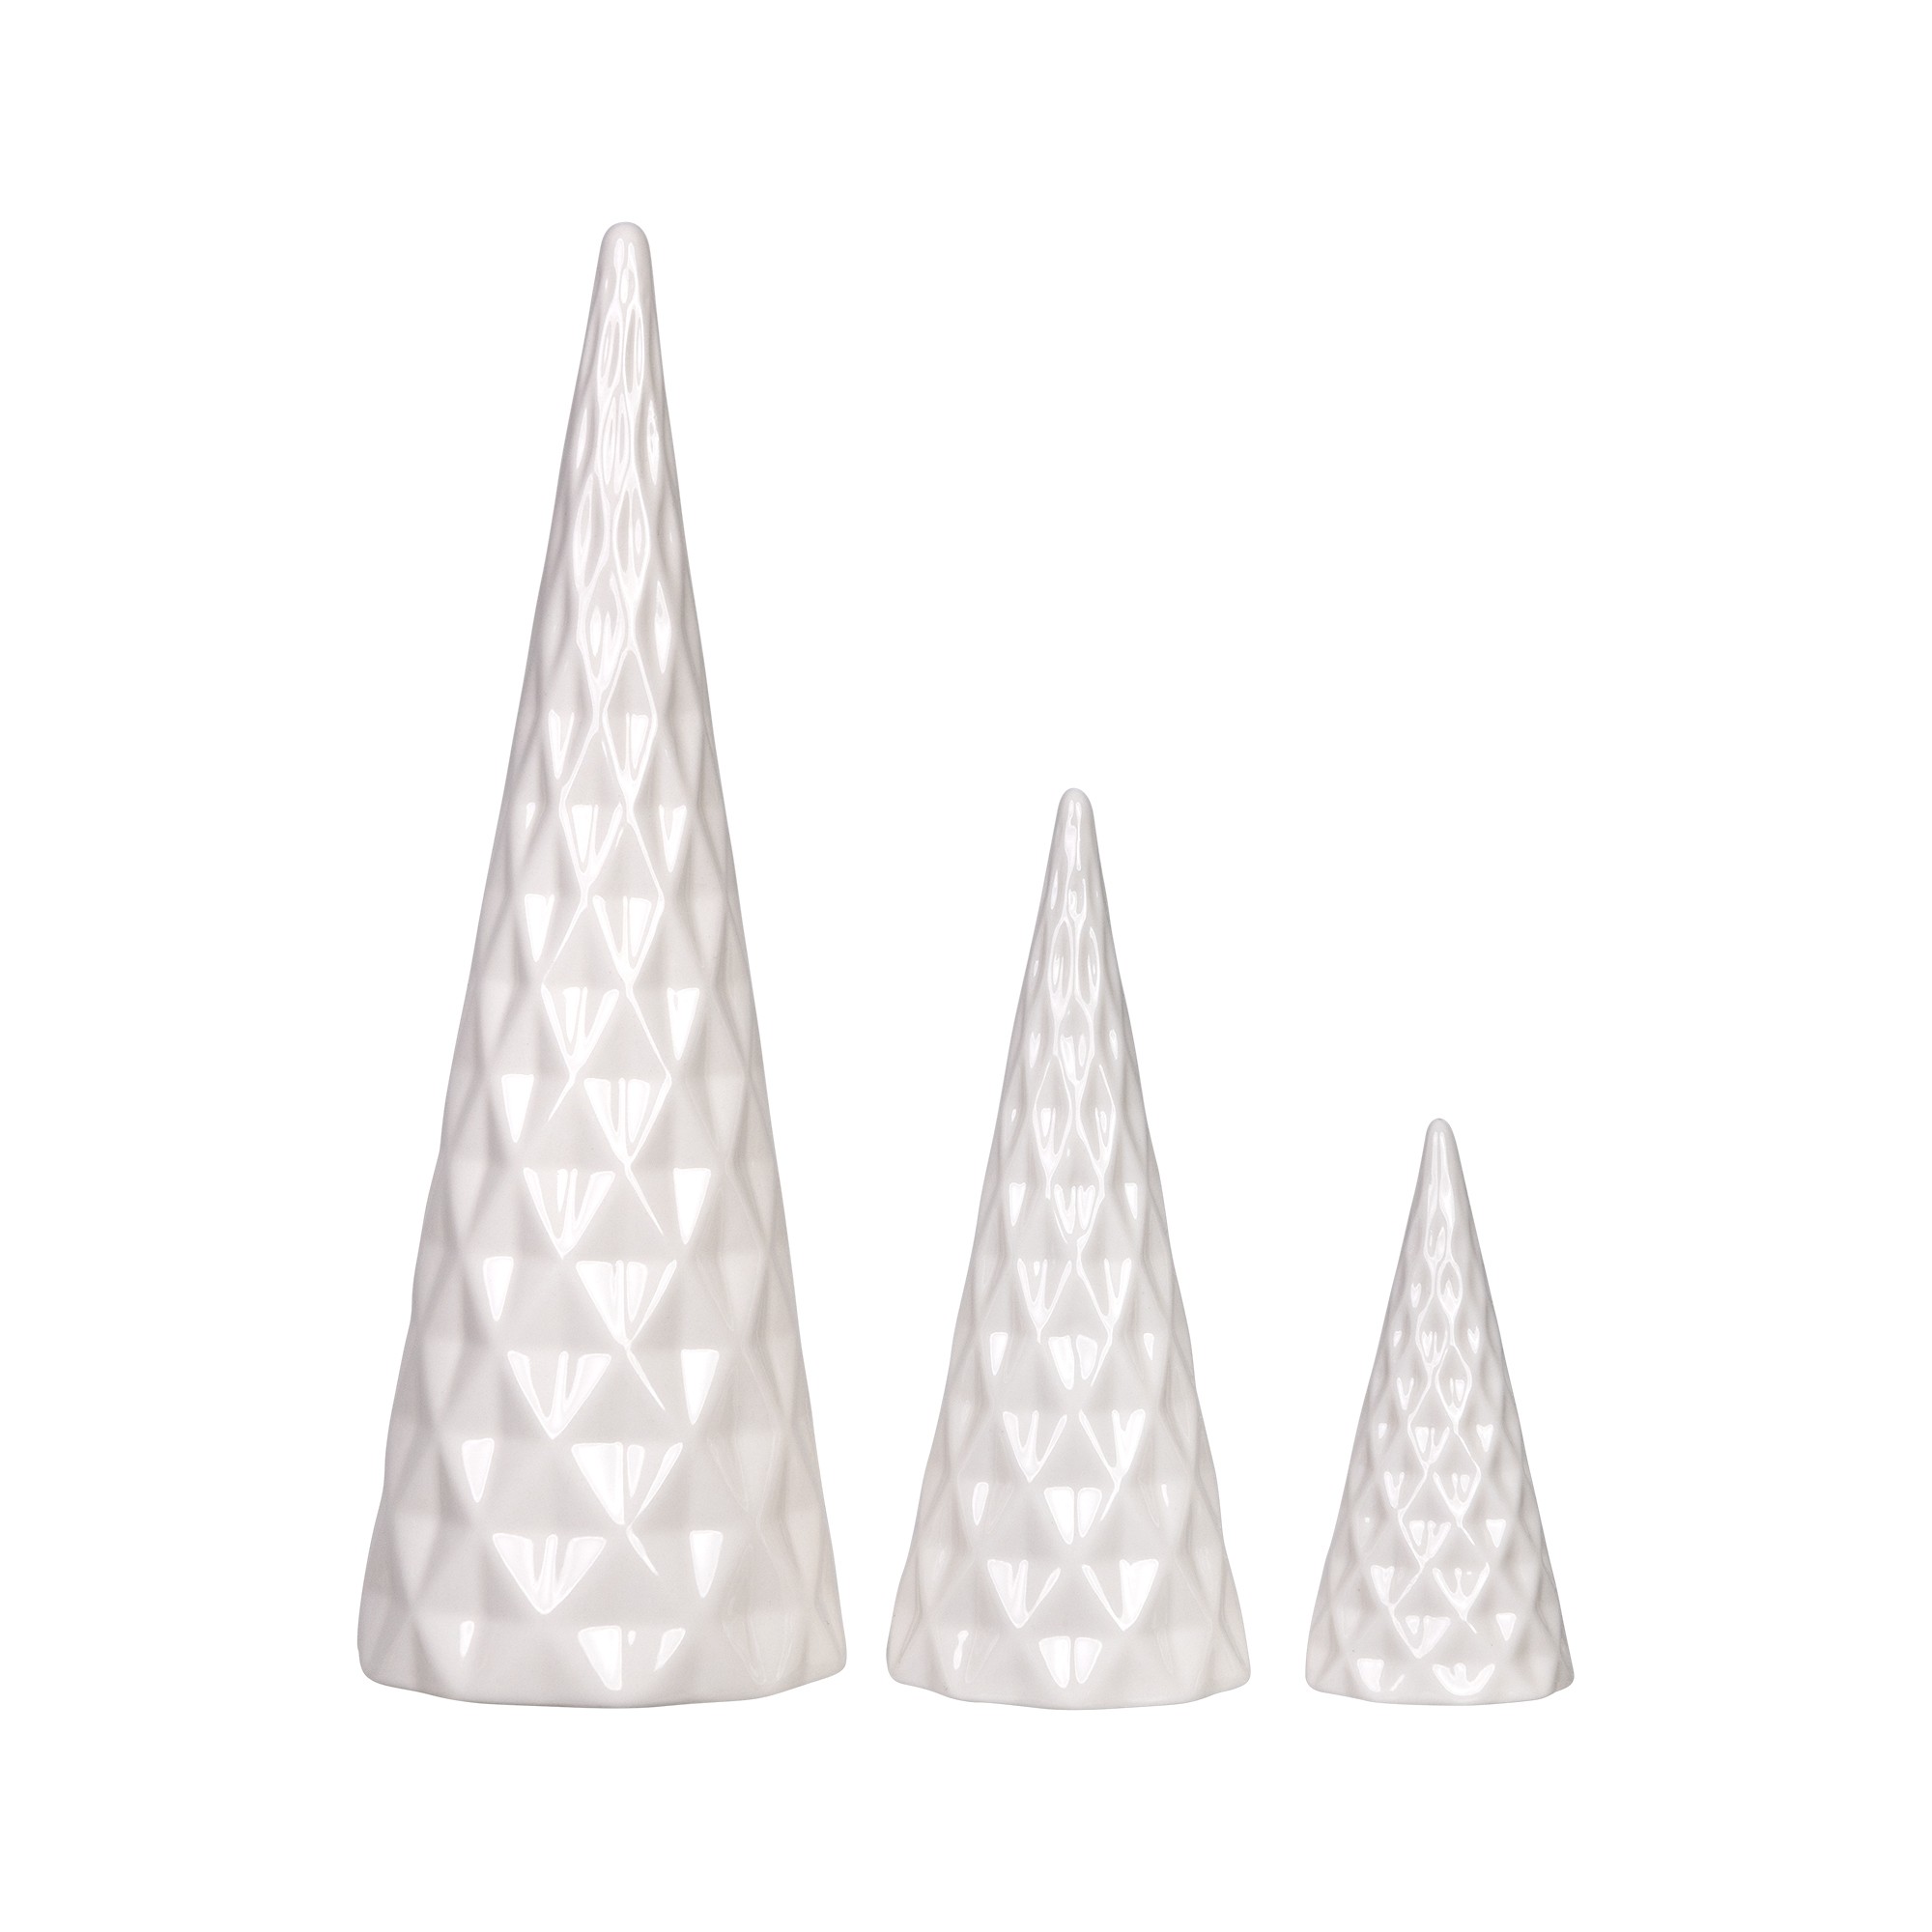 Set of Three White Ceramic Tree DTcor Pieces